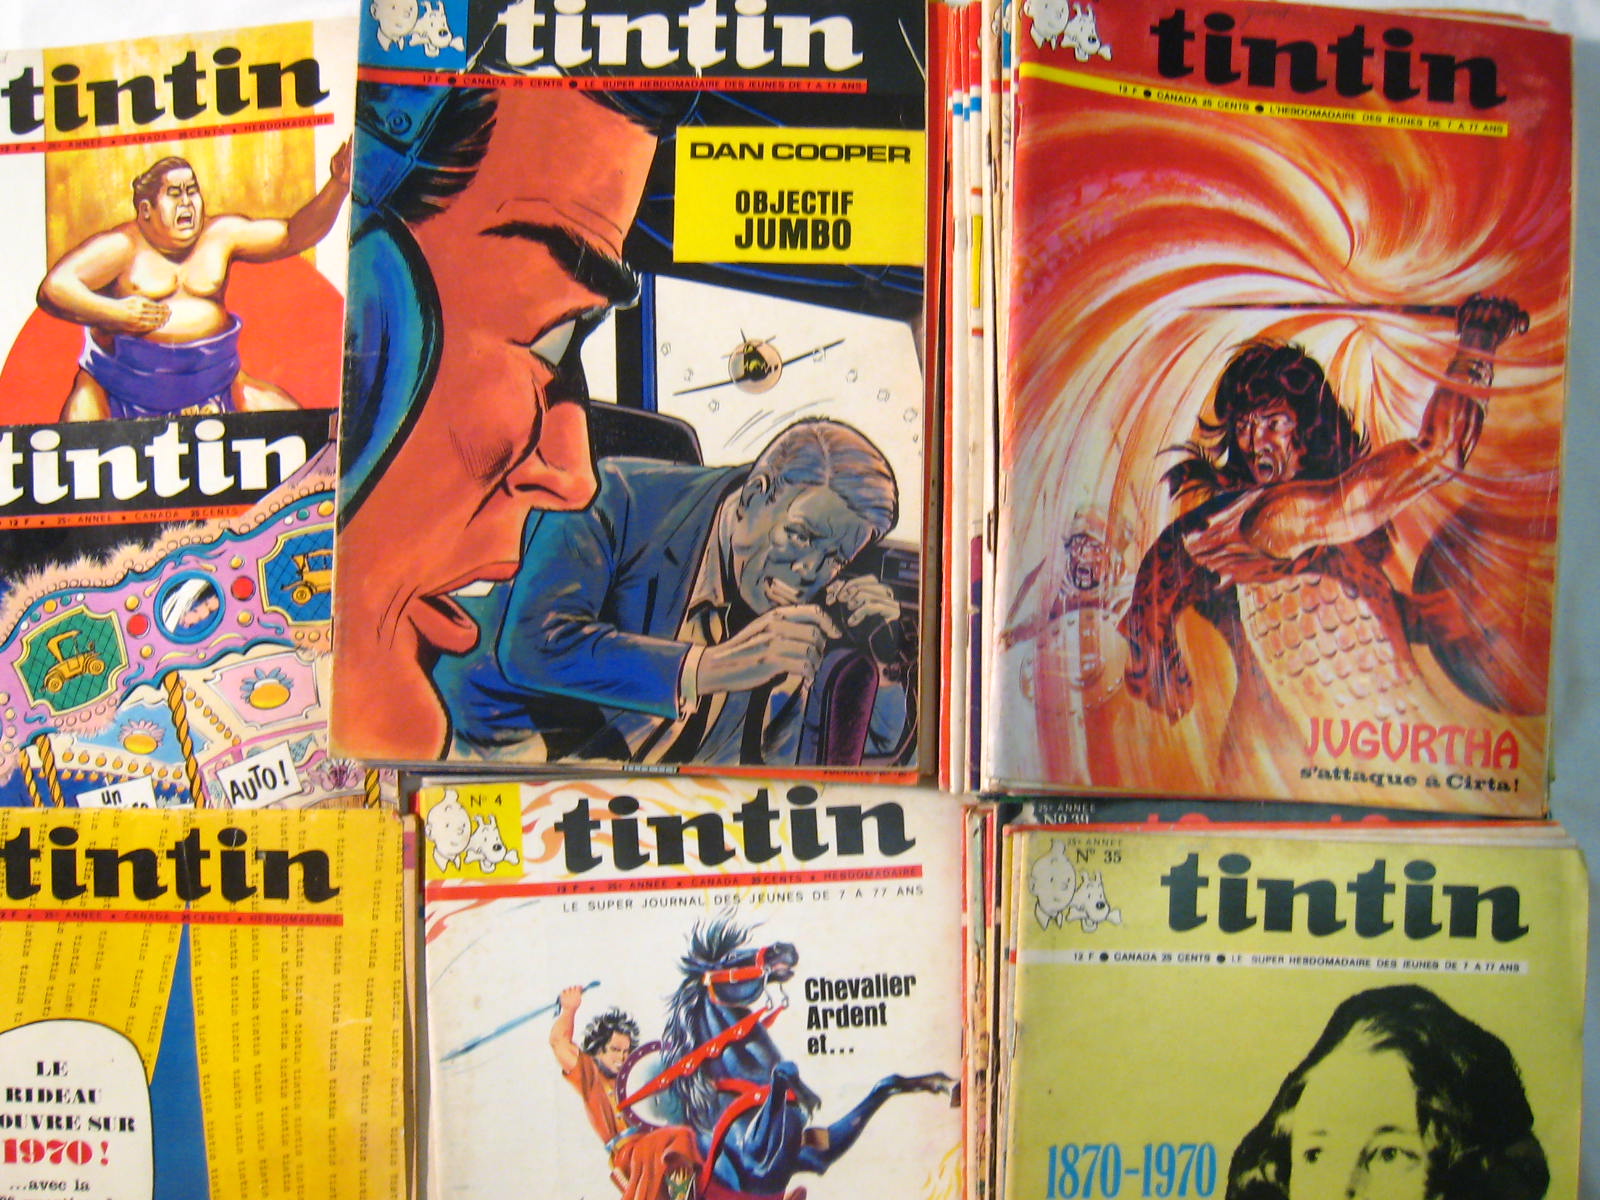 A quantity of TINTIN comics, issues 1-52 inclusive, 1970.